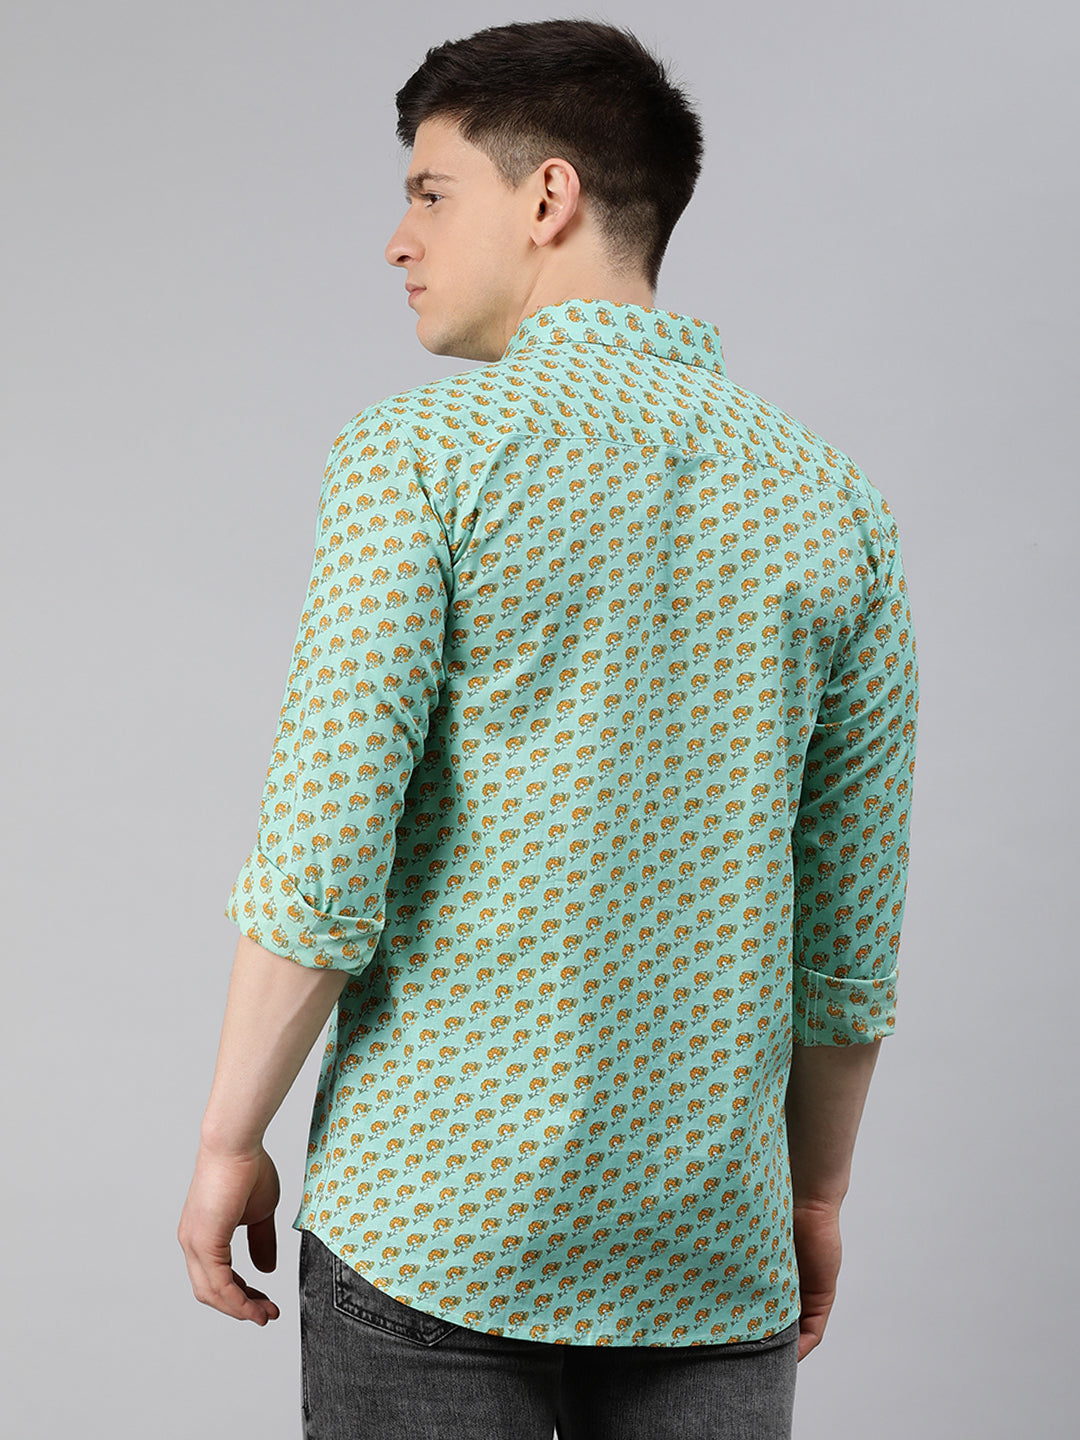 Sea Green Cotton Full Sleeves Shirts For Men-MMF0237 - NOZ2TOZ